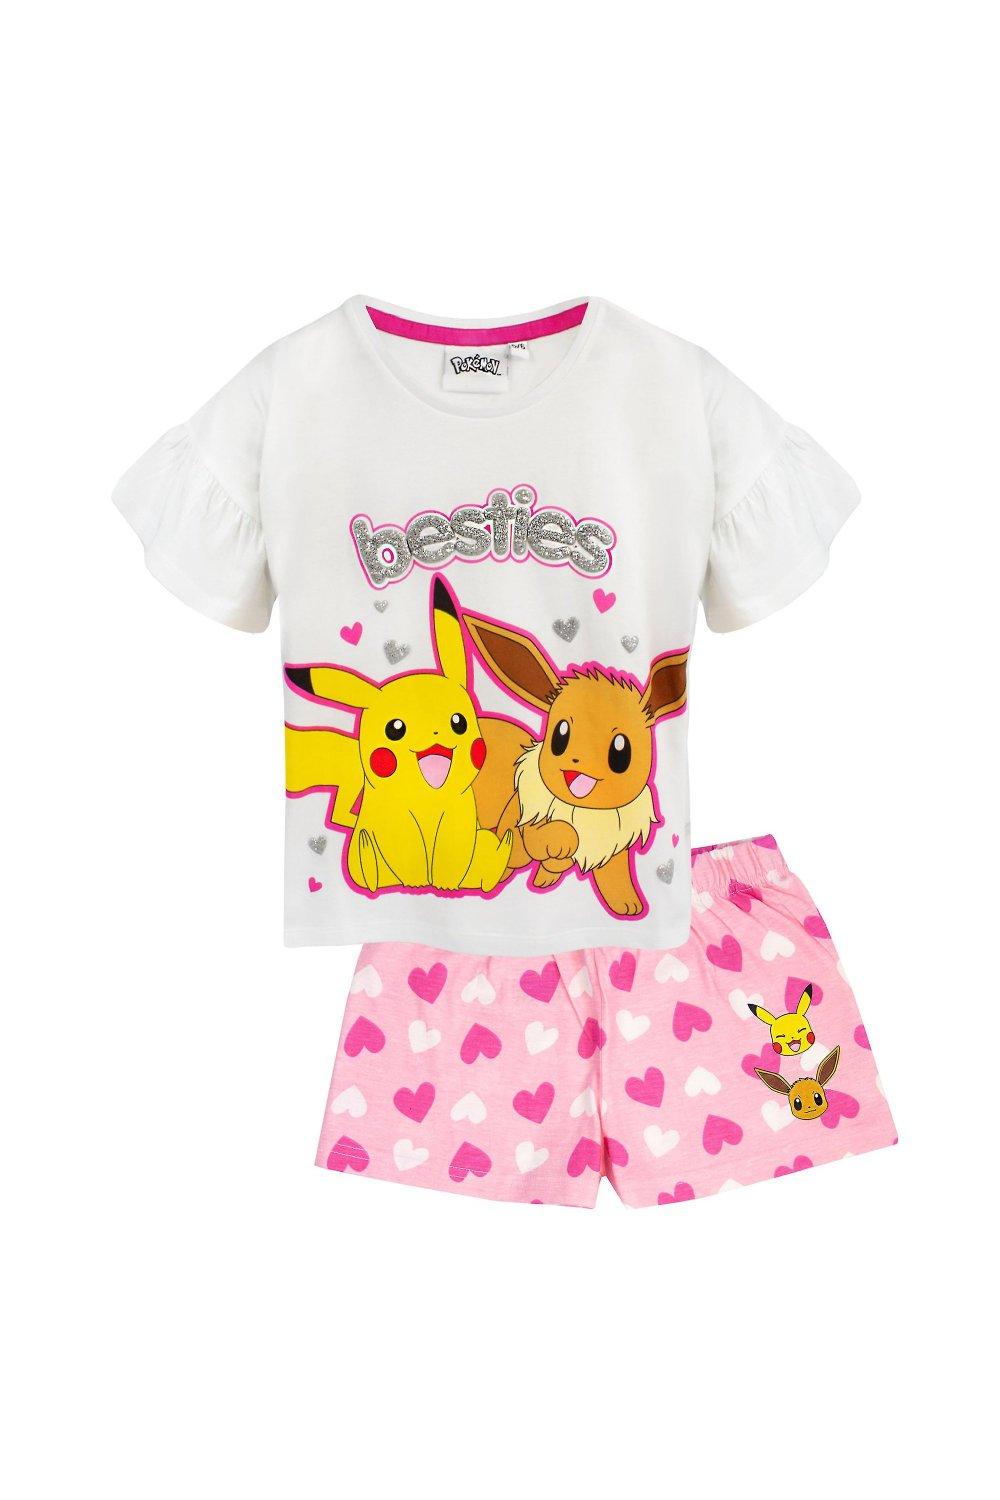 Besties Pikachu & Eevee Frill Short Pyjama Set (Pack of 3)